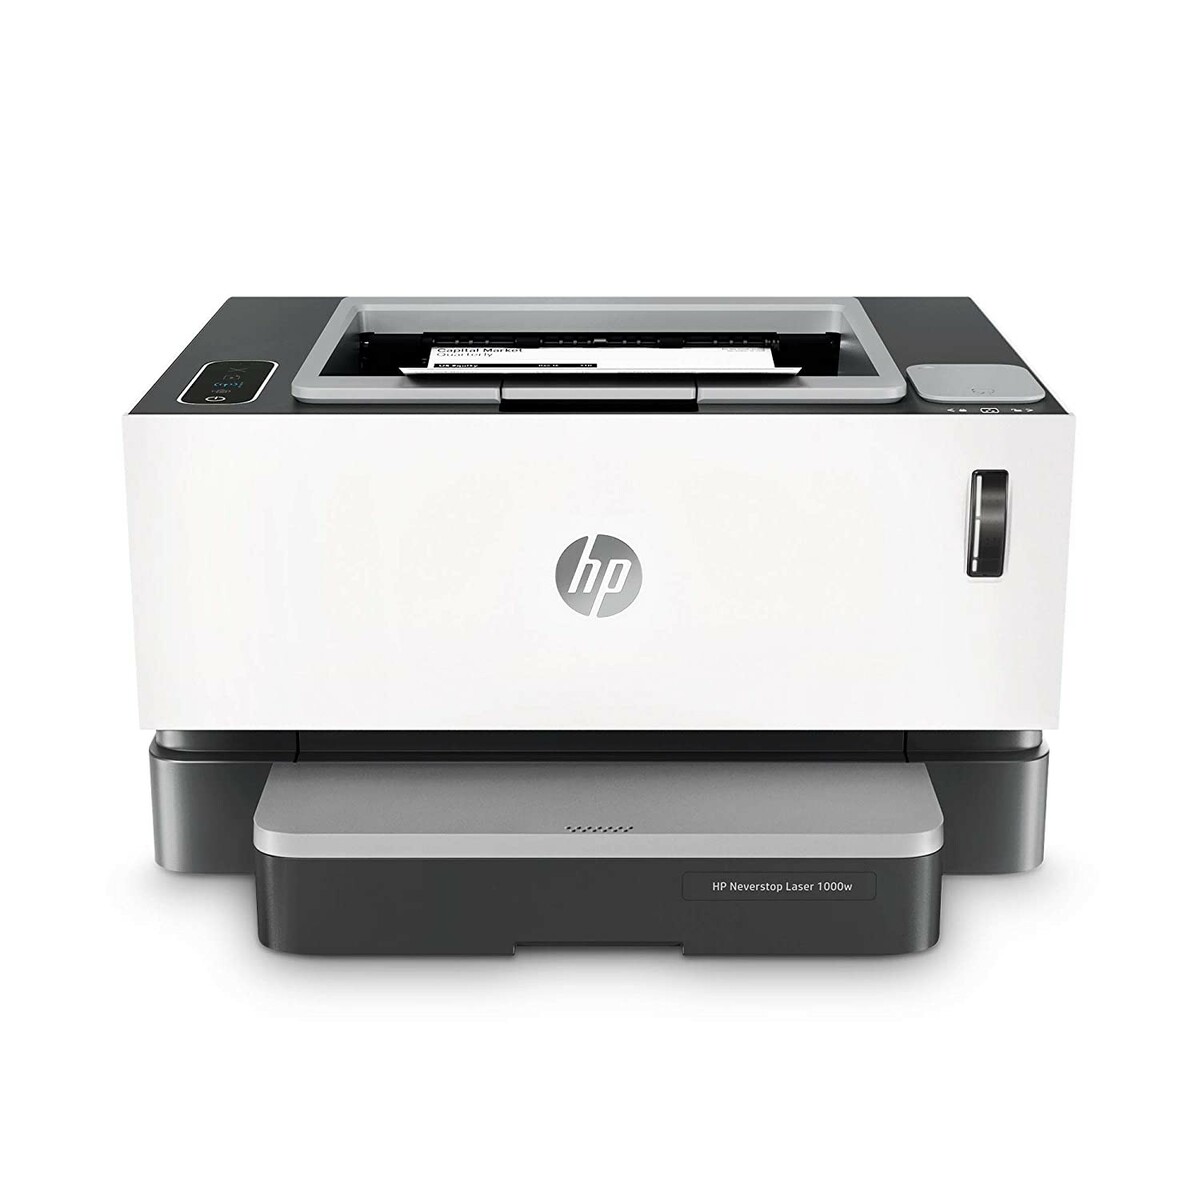 HP Laser Jet Printer MFP 1000W